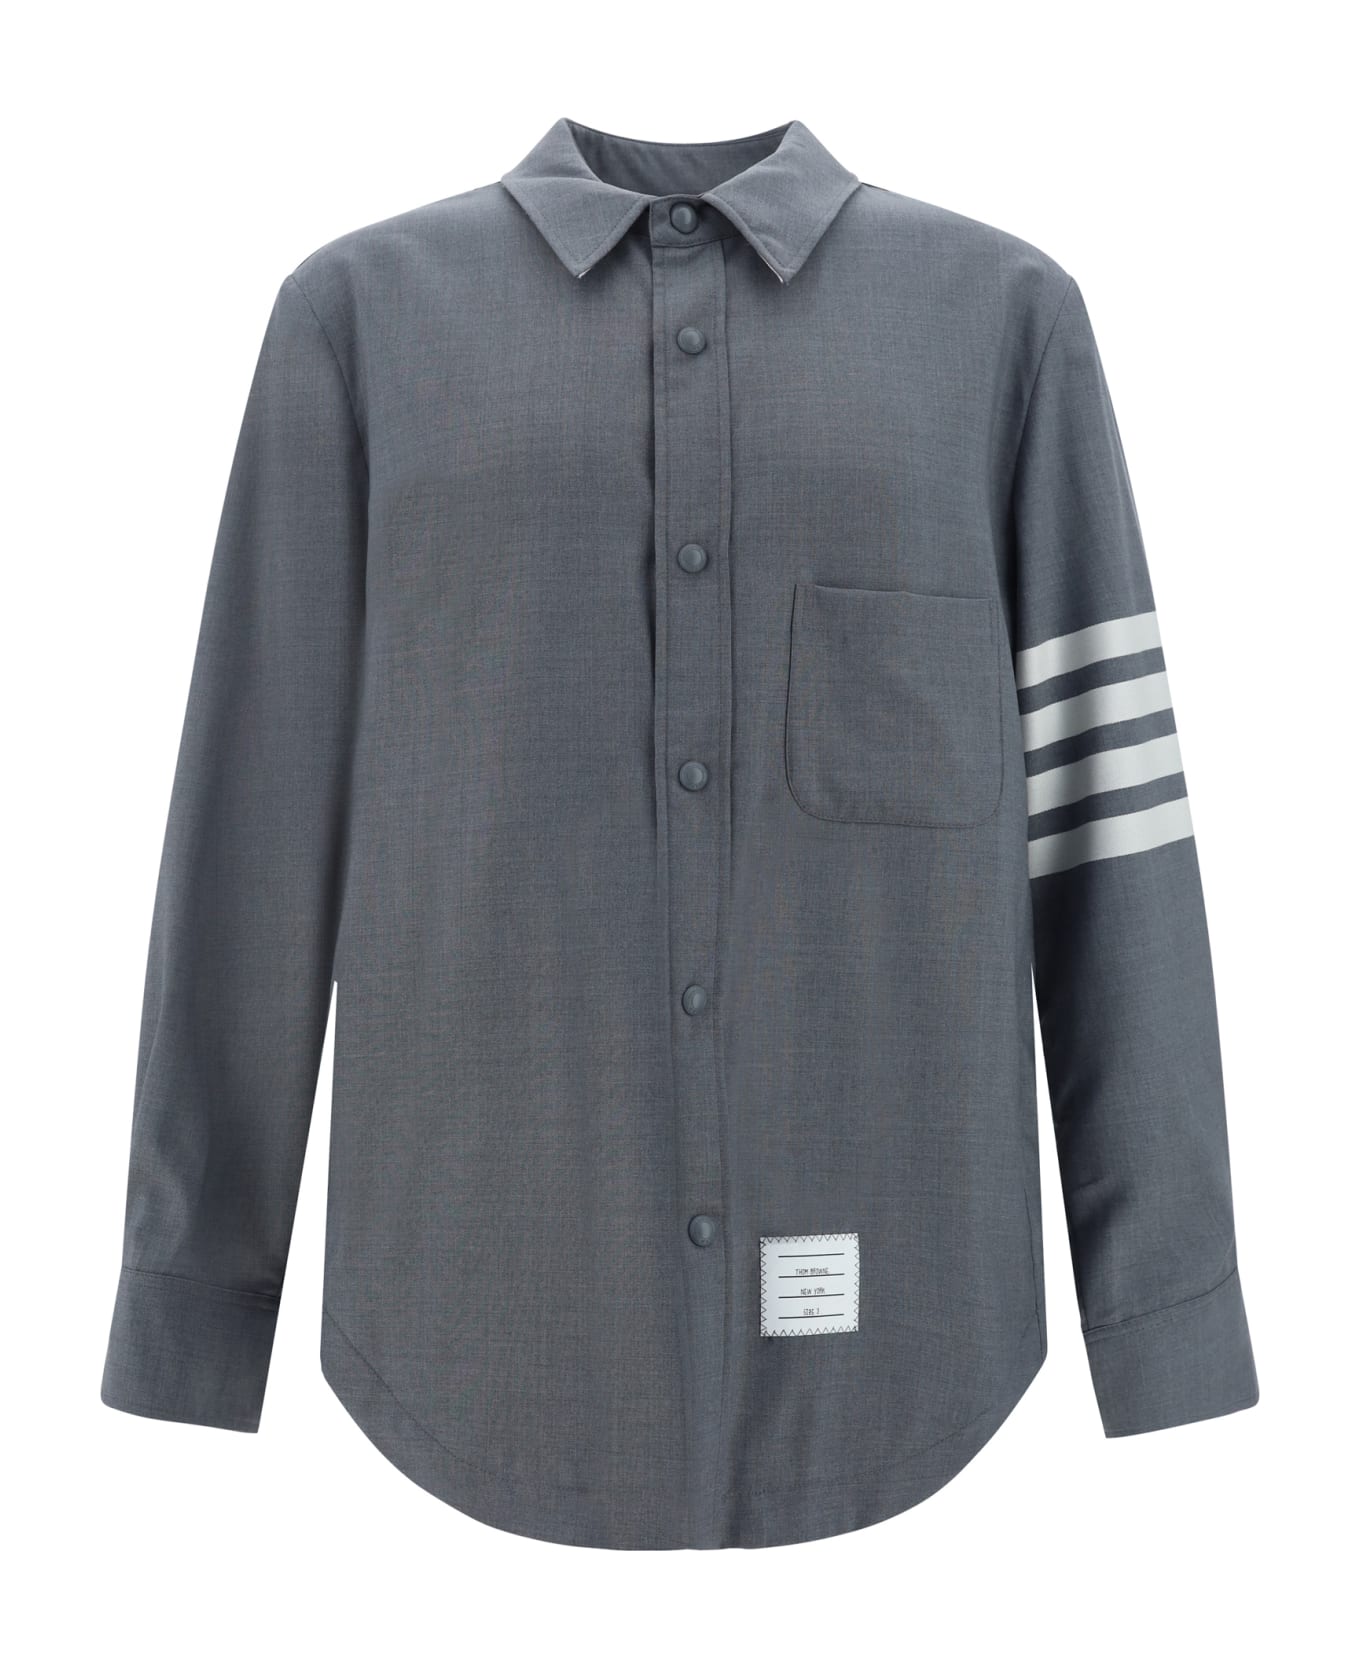 Thom Browne Shirt - Med Grey